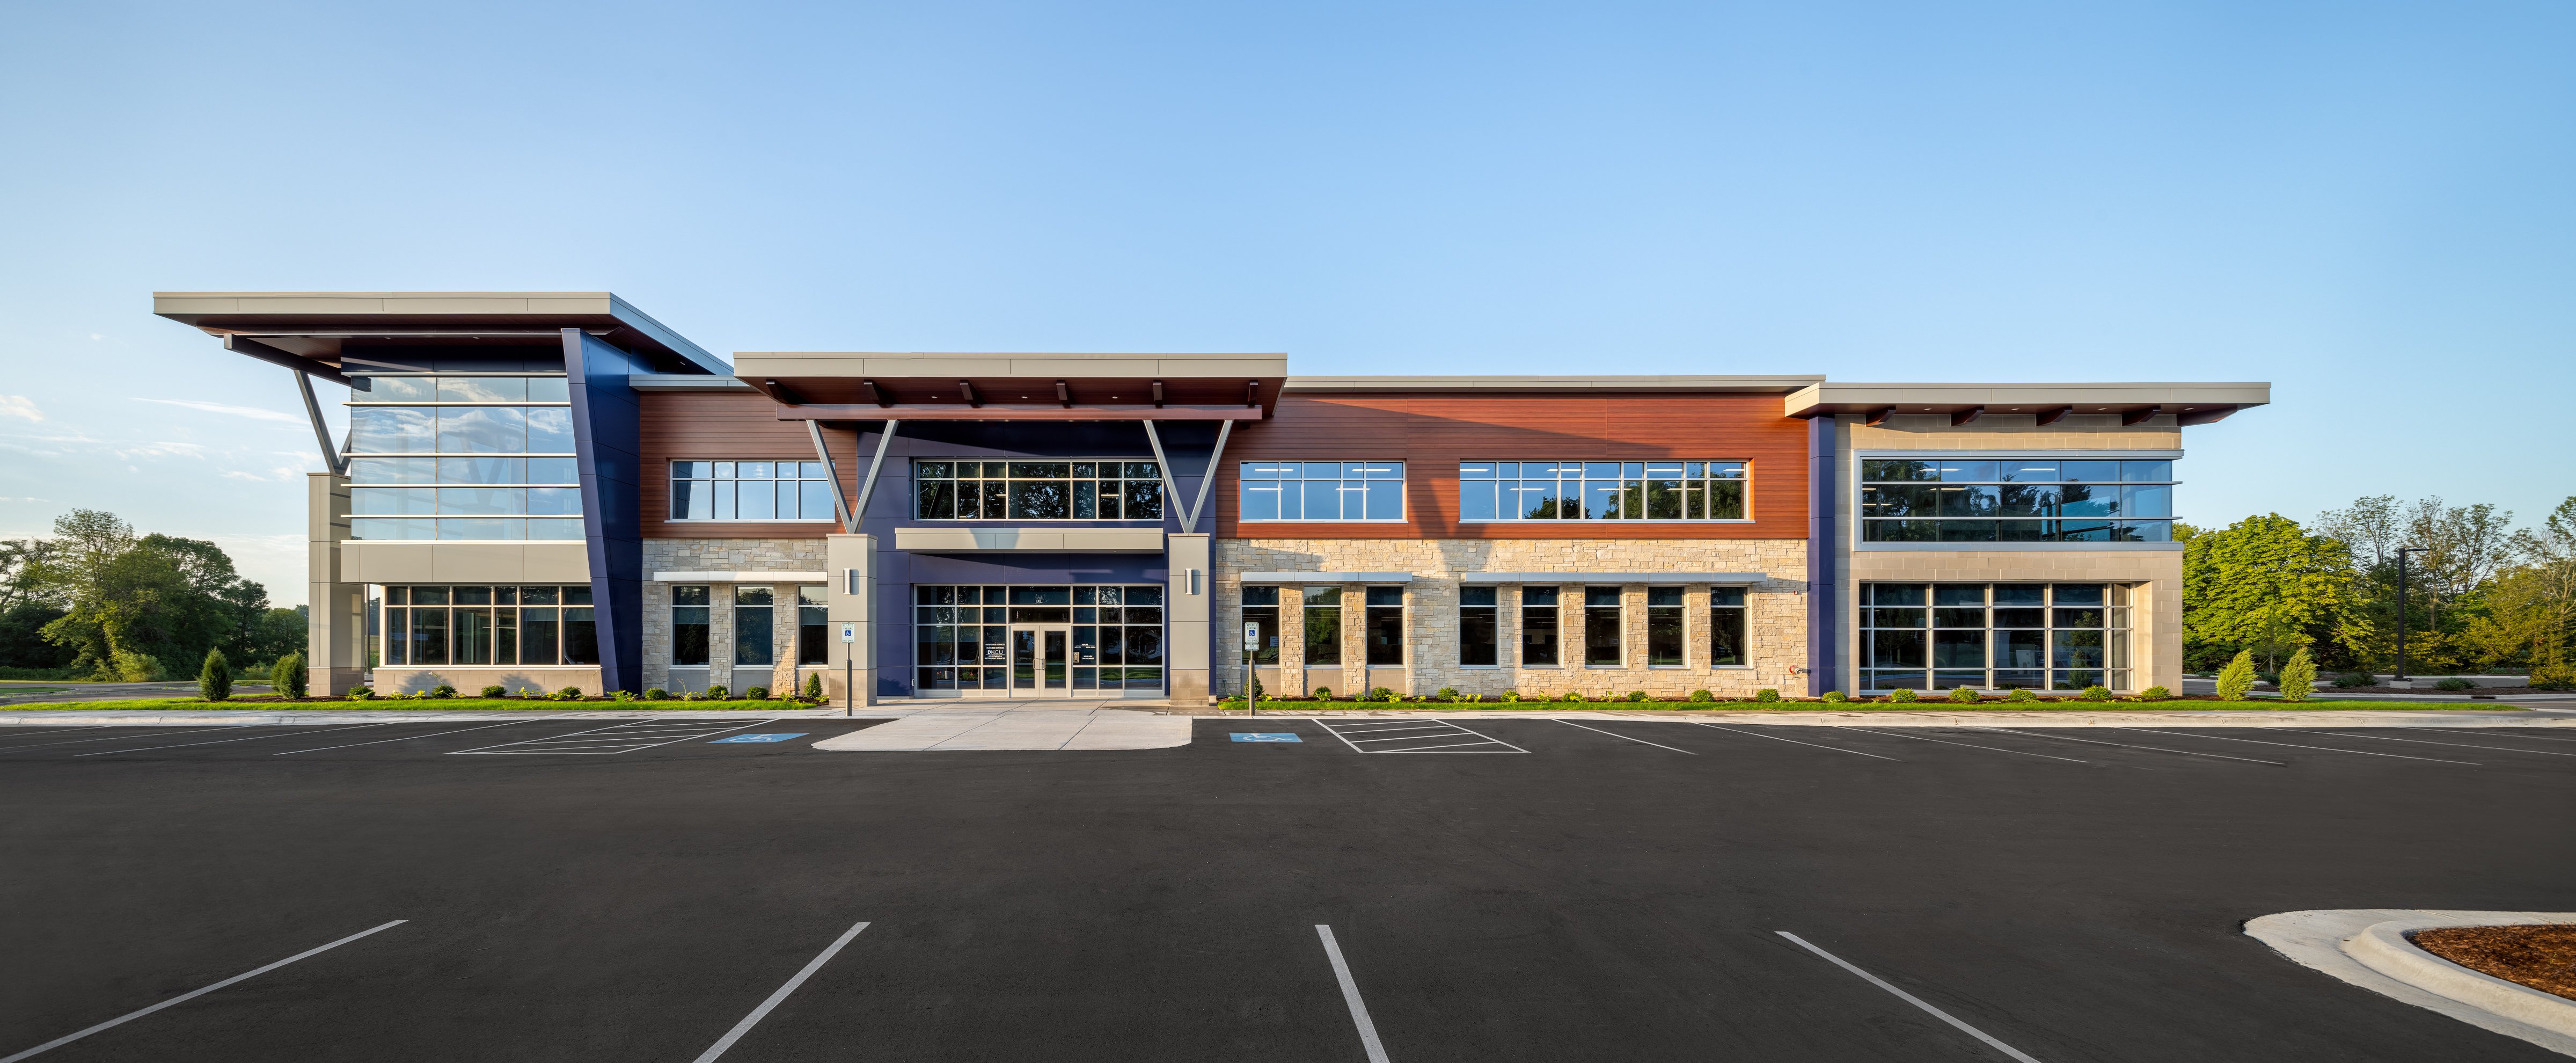 Corporate Center located in Sheboygan Wisconsin